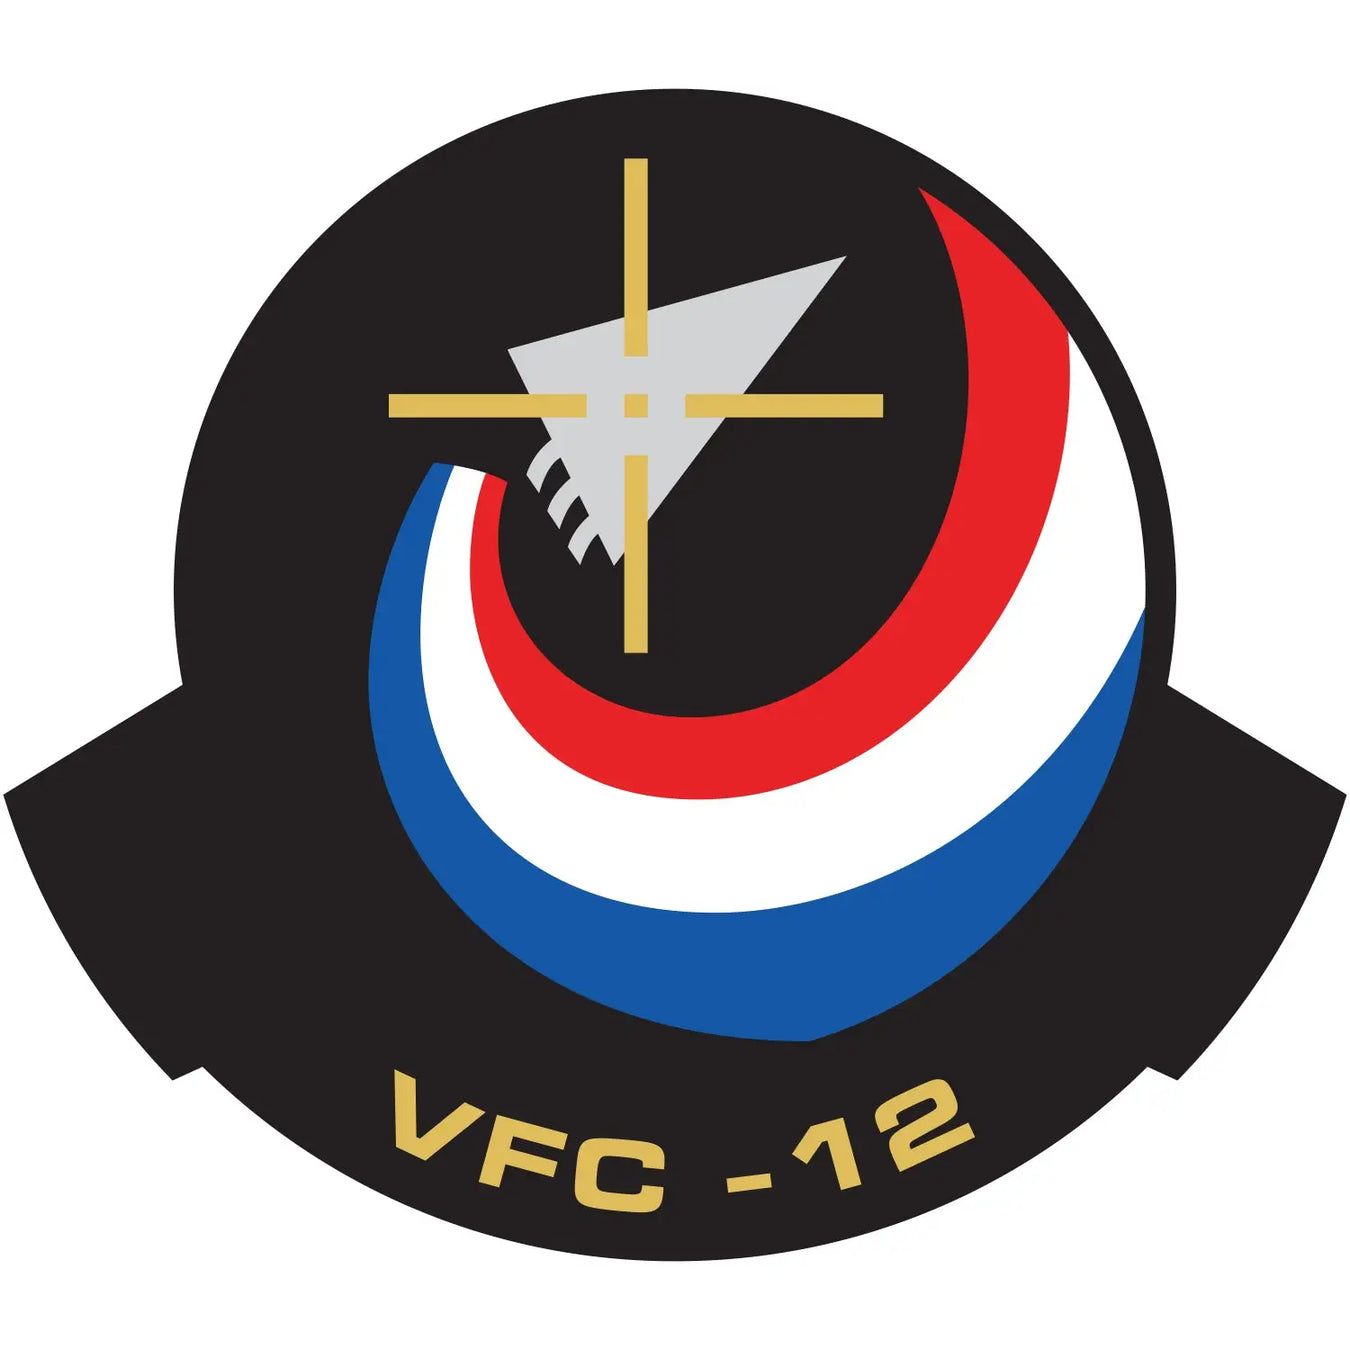 Fighter Squadron Composite 12 (VFC-12) Emblem Logo Crest Insignia